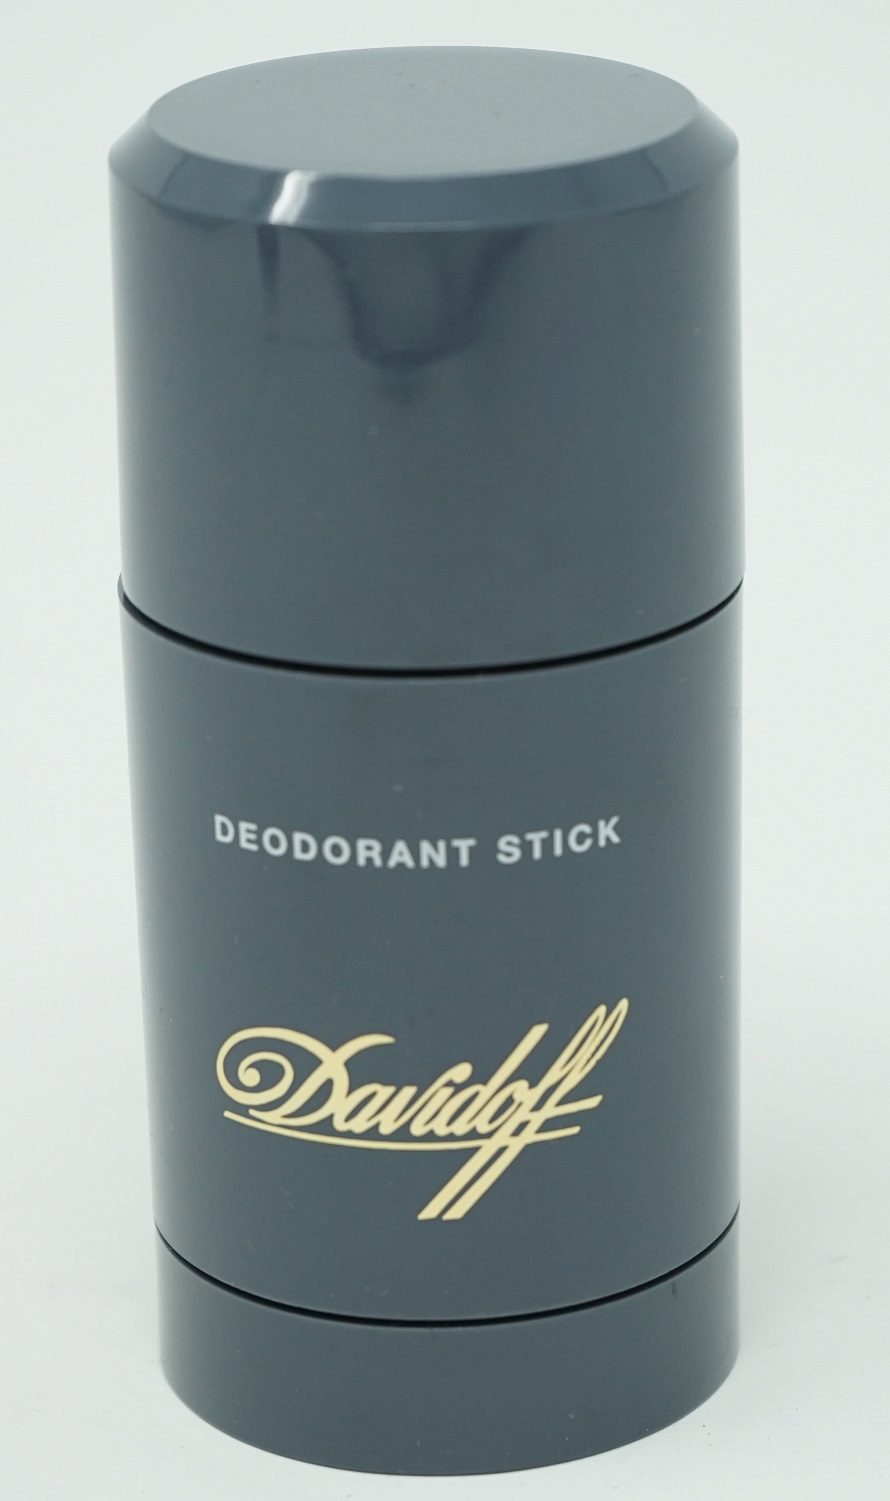 Davidoff Classic Deodorant Stick 75 ml